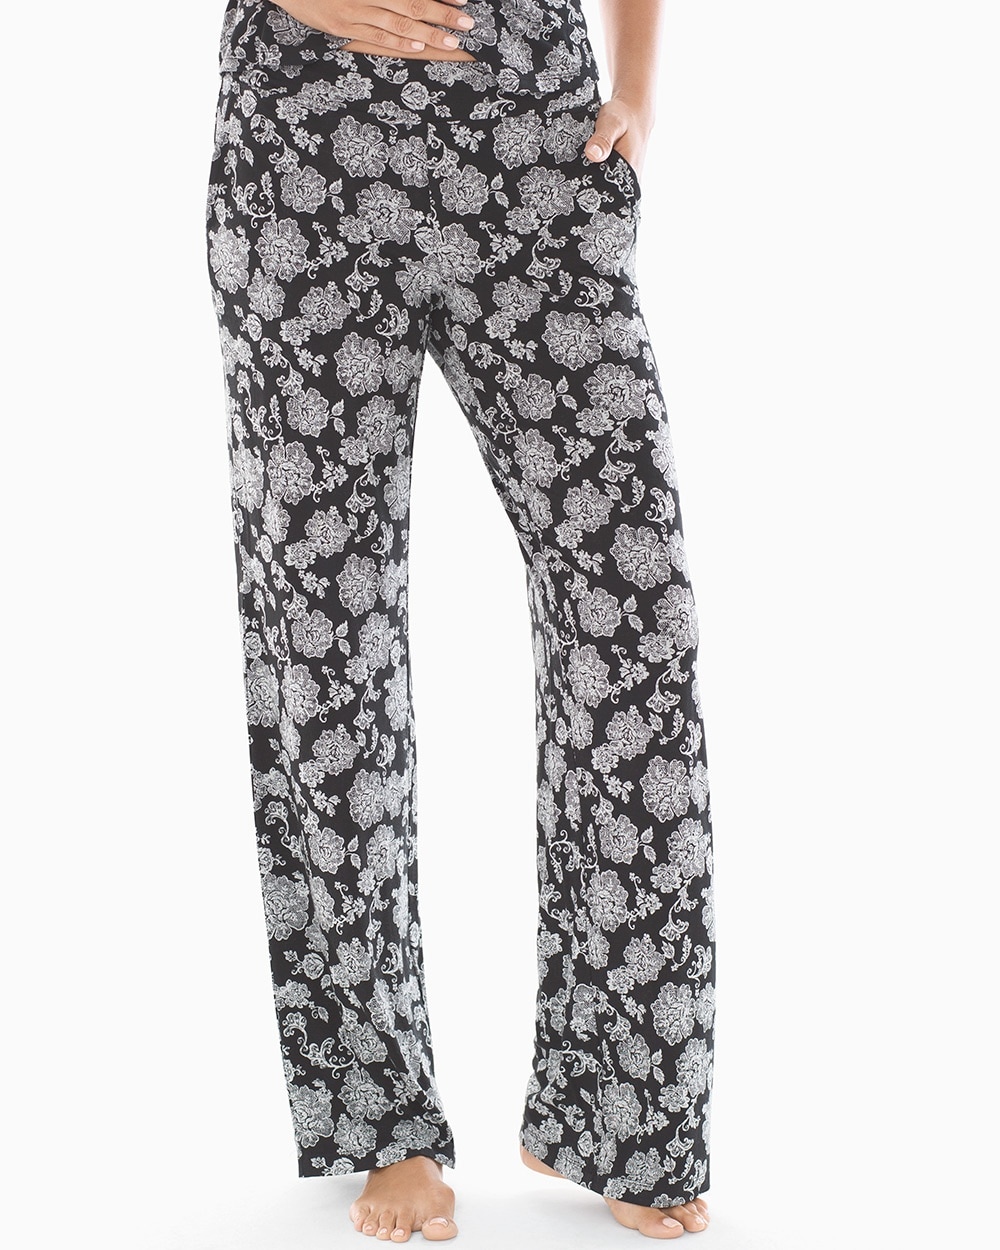 Cool Nights Pajama Pants Elegant Lace Black